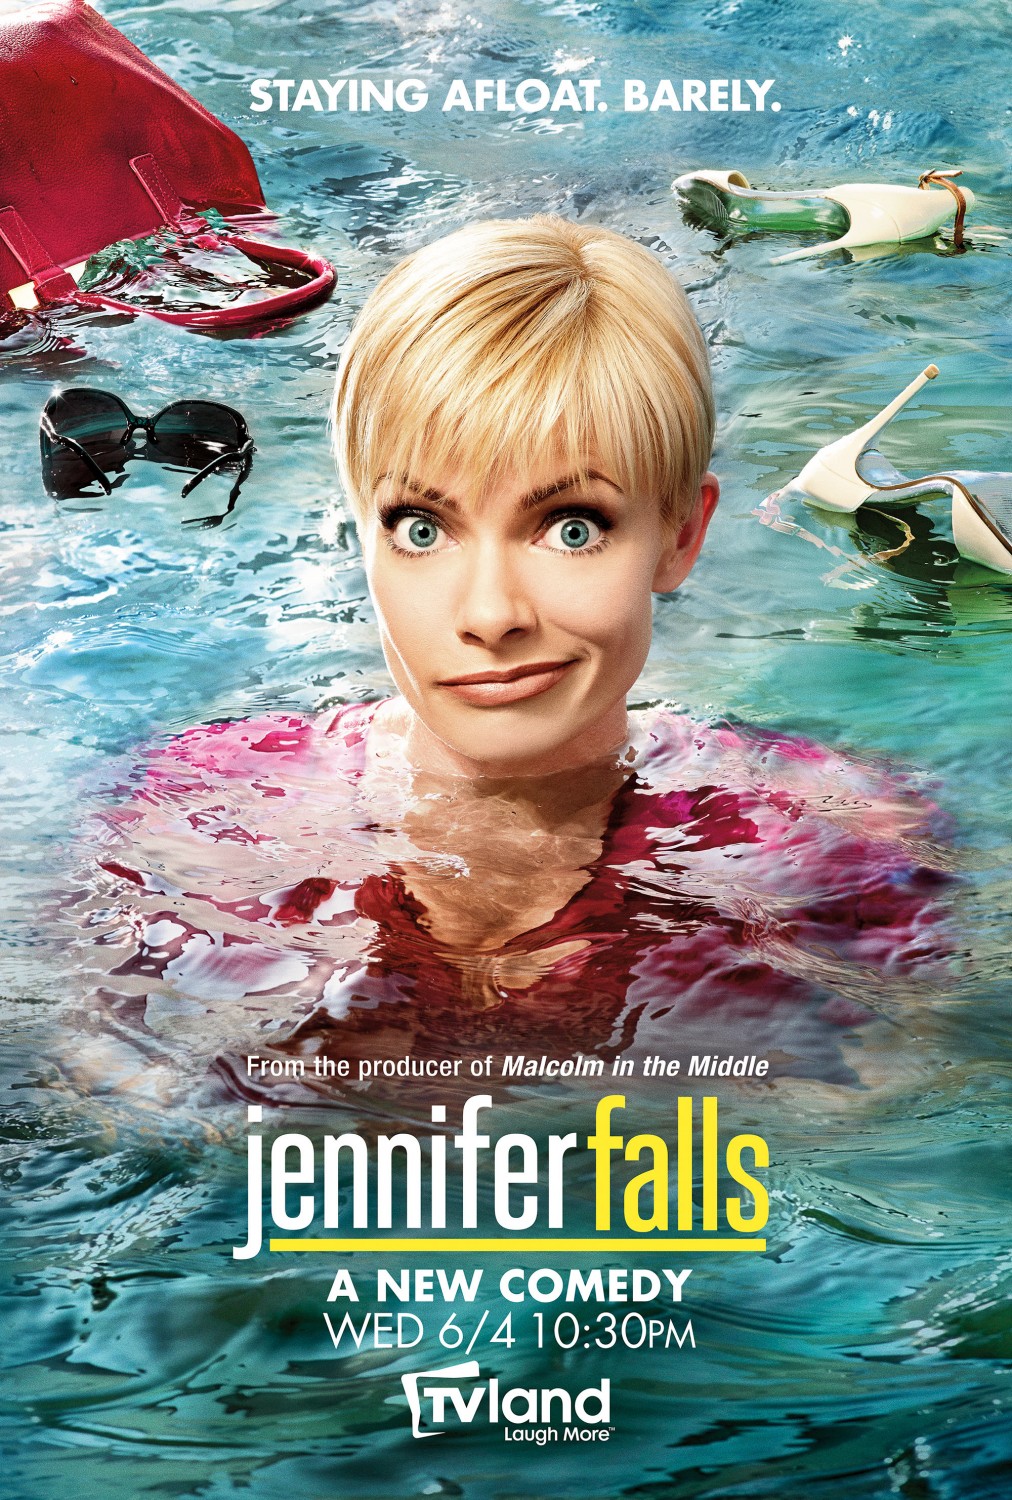 Extra Large TV Poster Image for Jennifer Falls (#1 of 2)